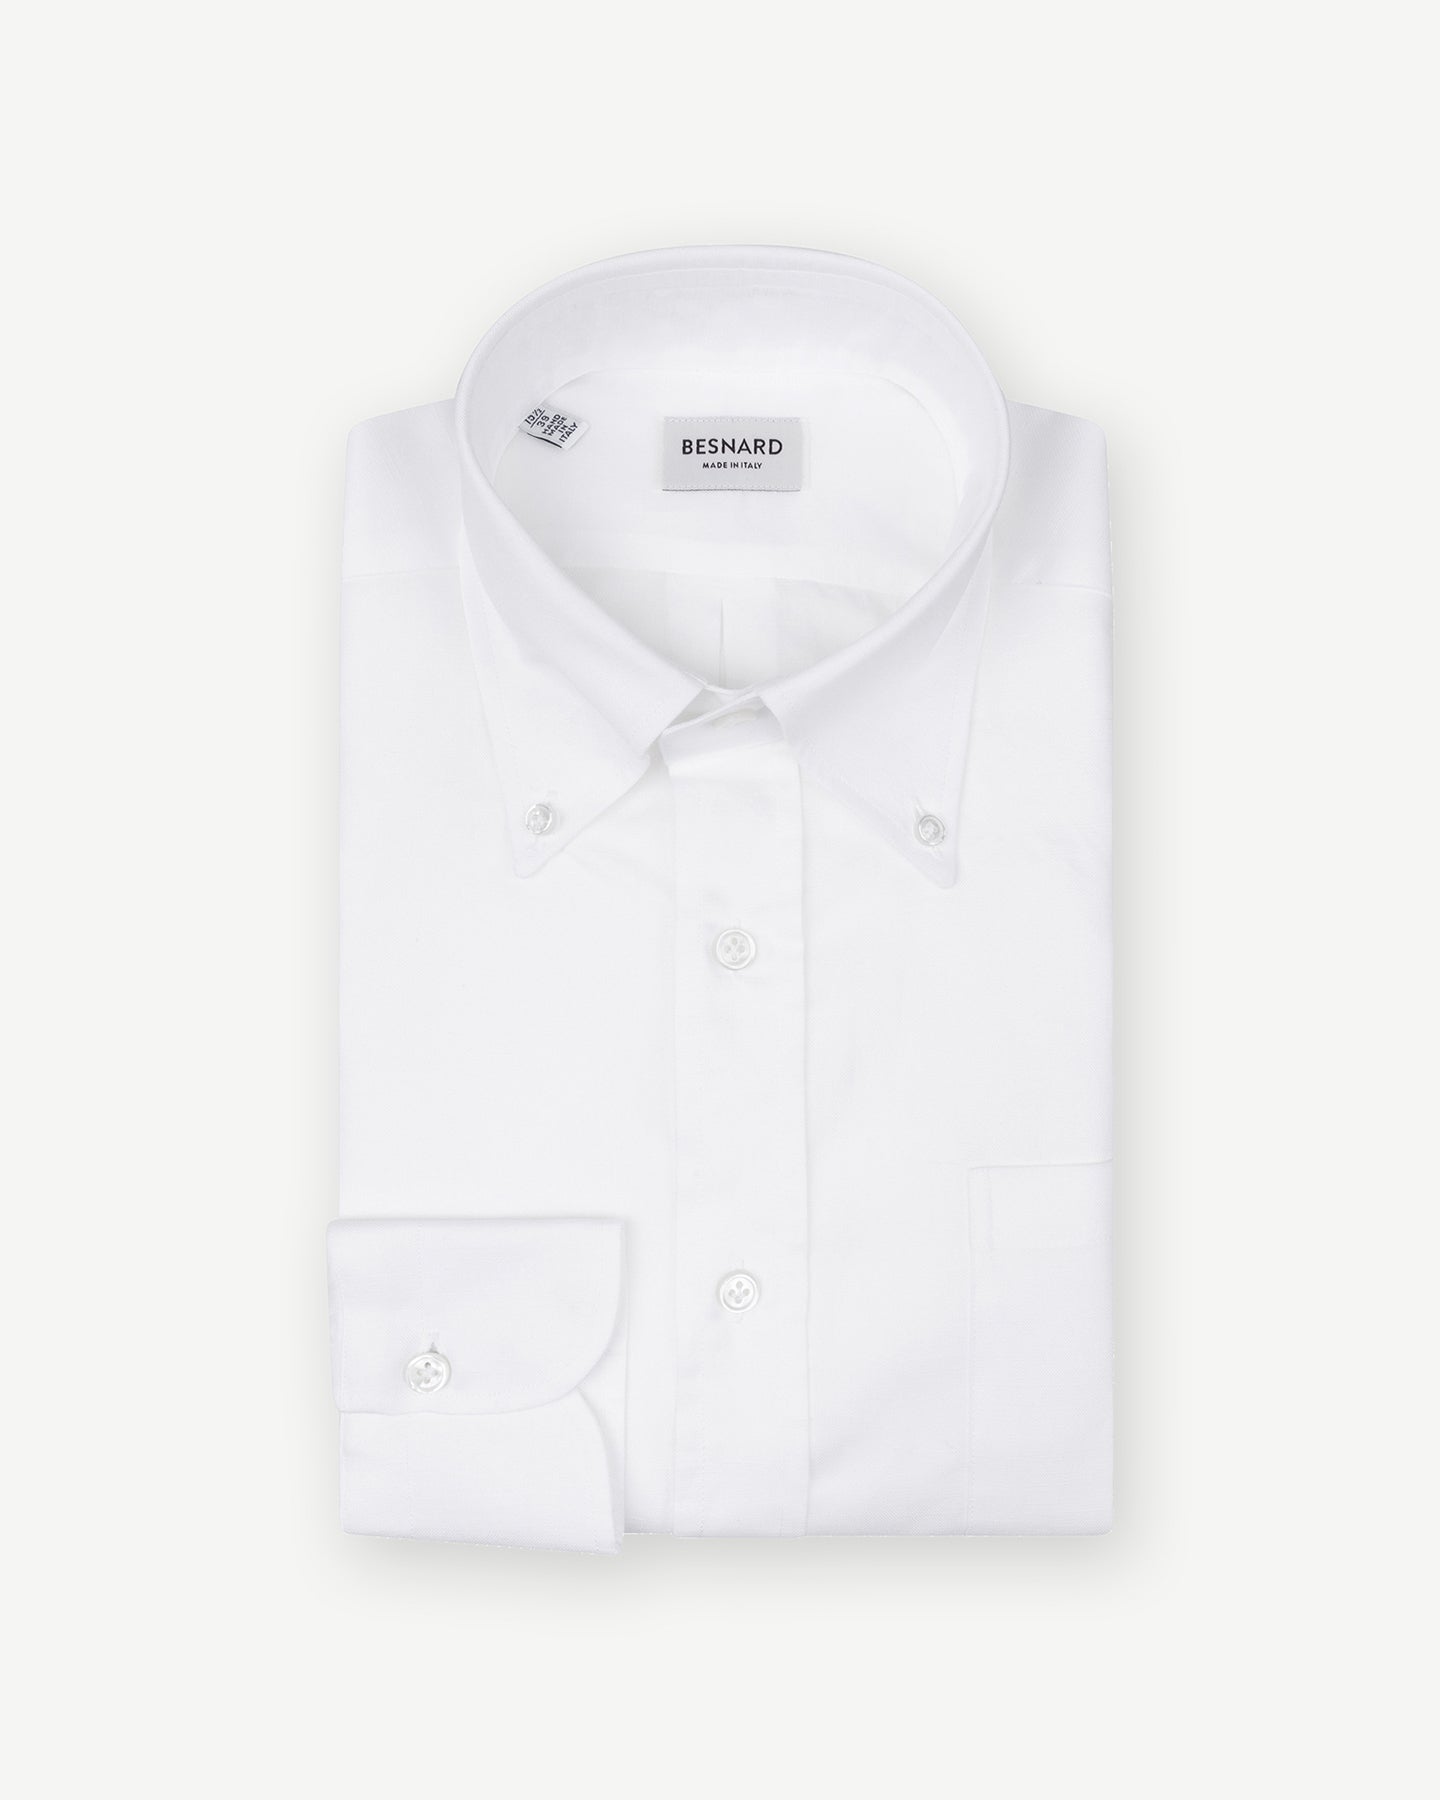 White cotton linen shirt